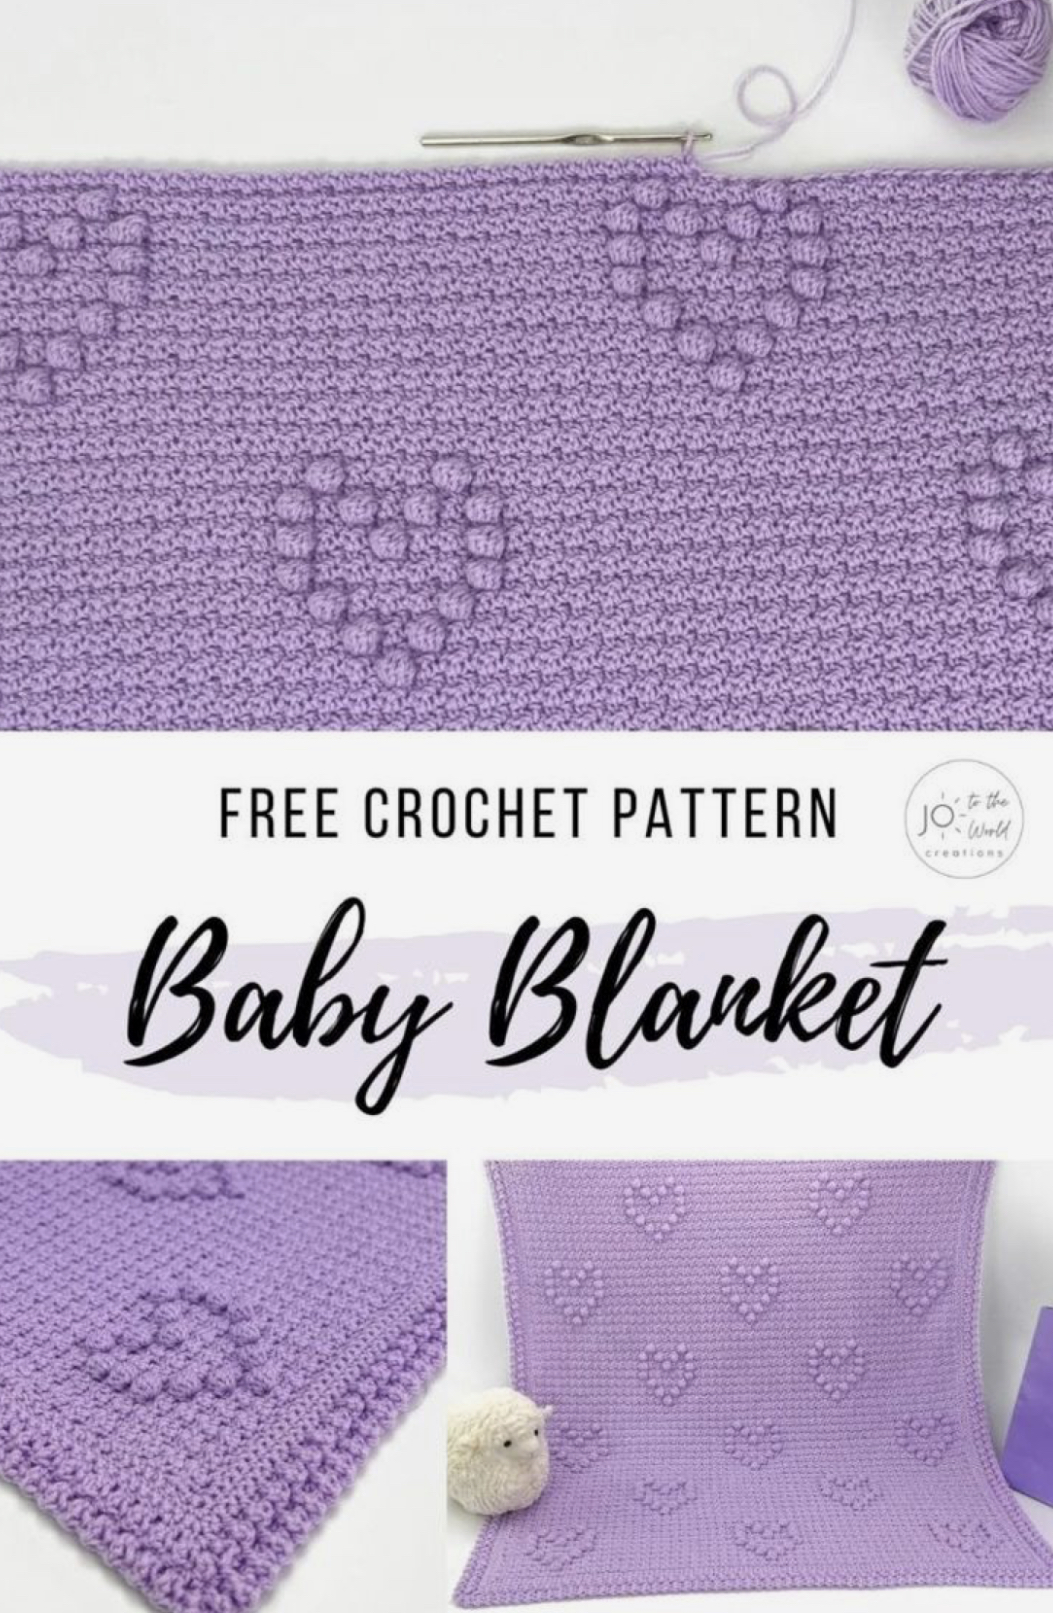 Hearts Puff Stitch Crochet Baby Blanket – FREE CROCHET PATTERN ...